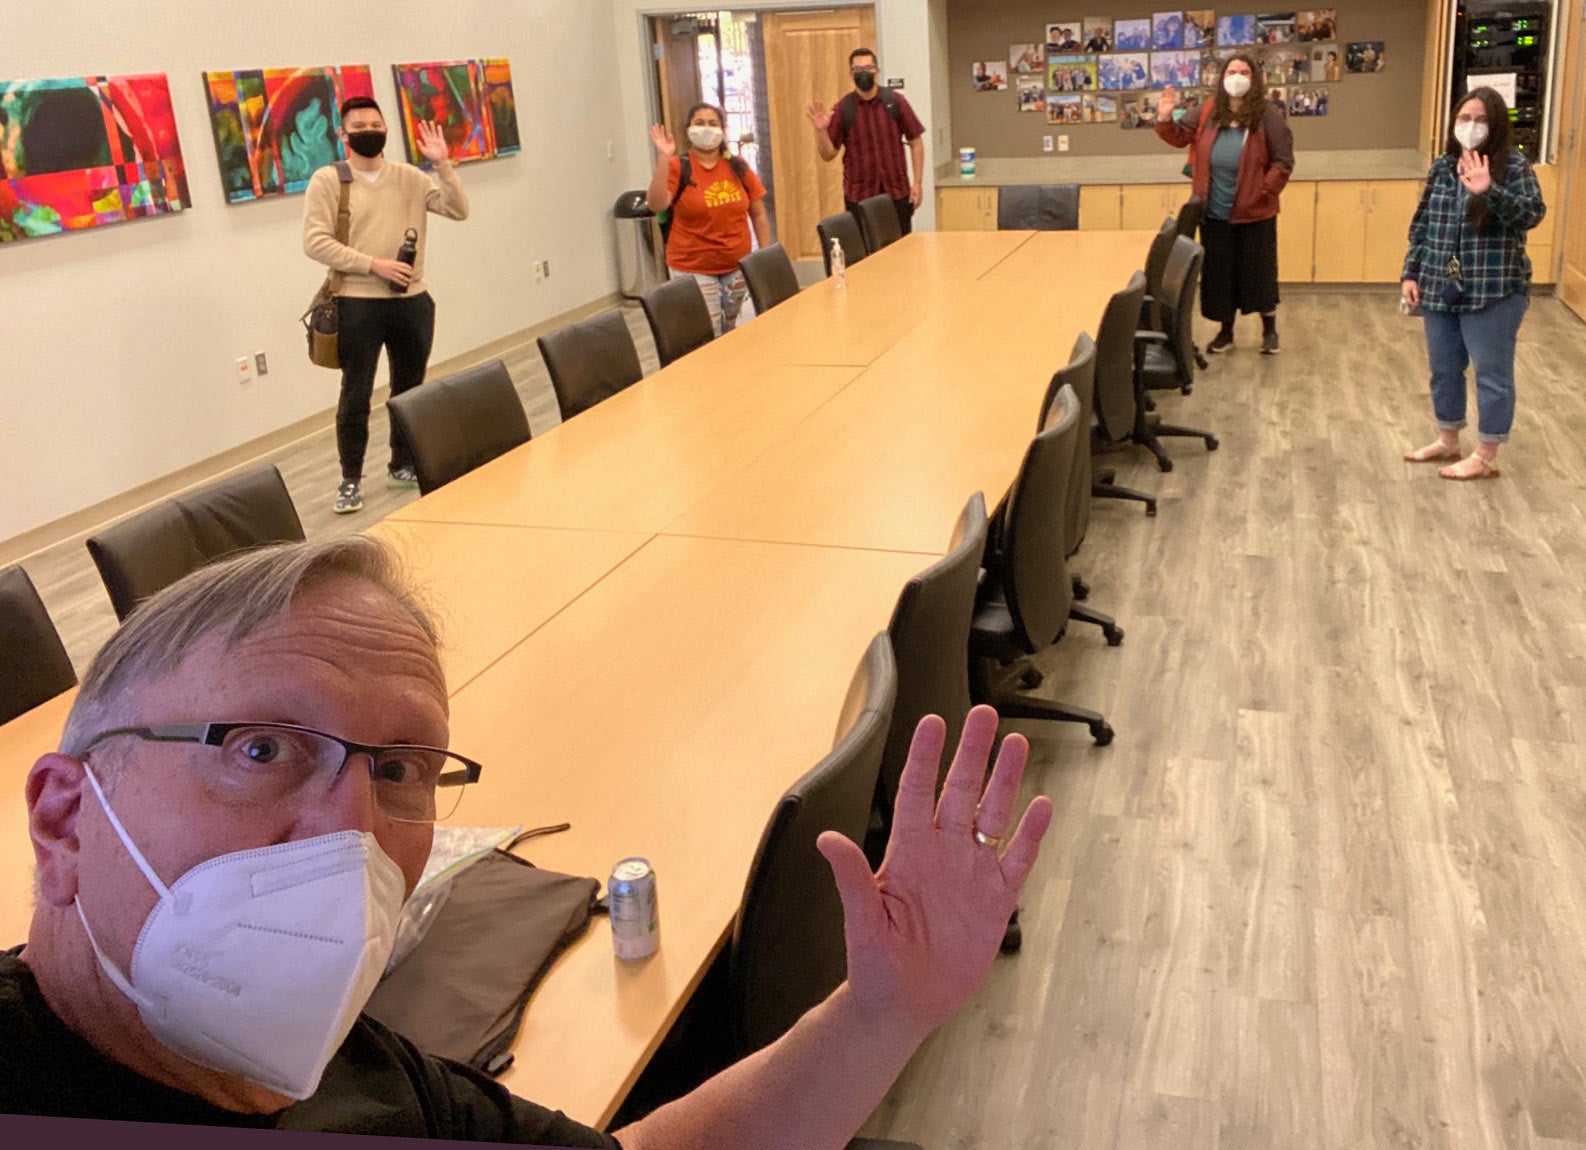 Professor (masked) gives a wave in selfie as masked students enter conference room.